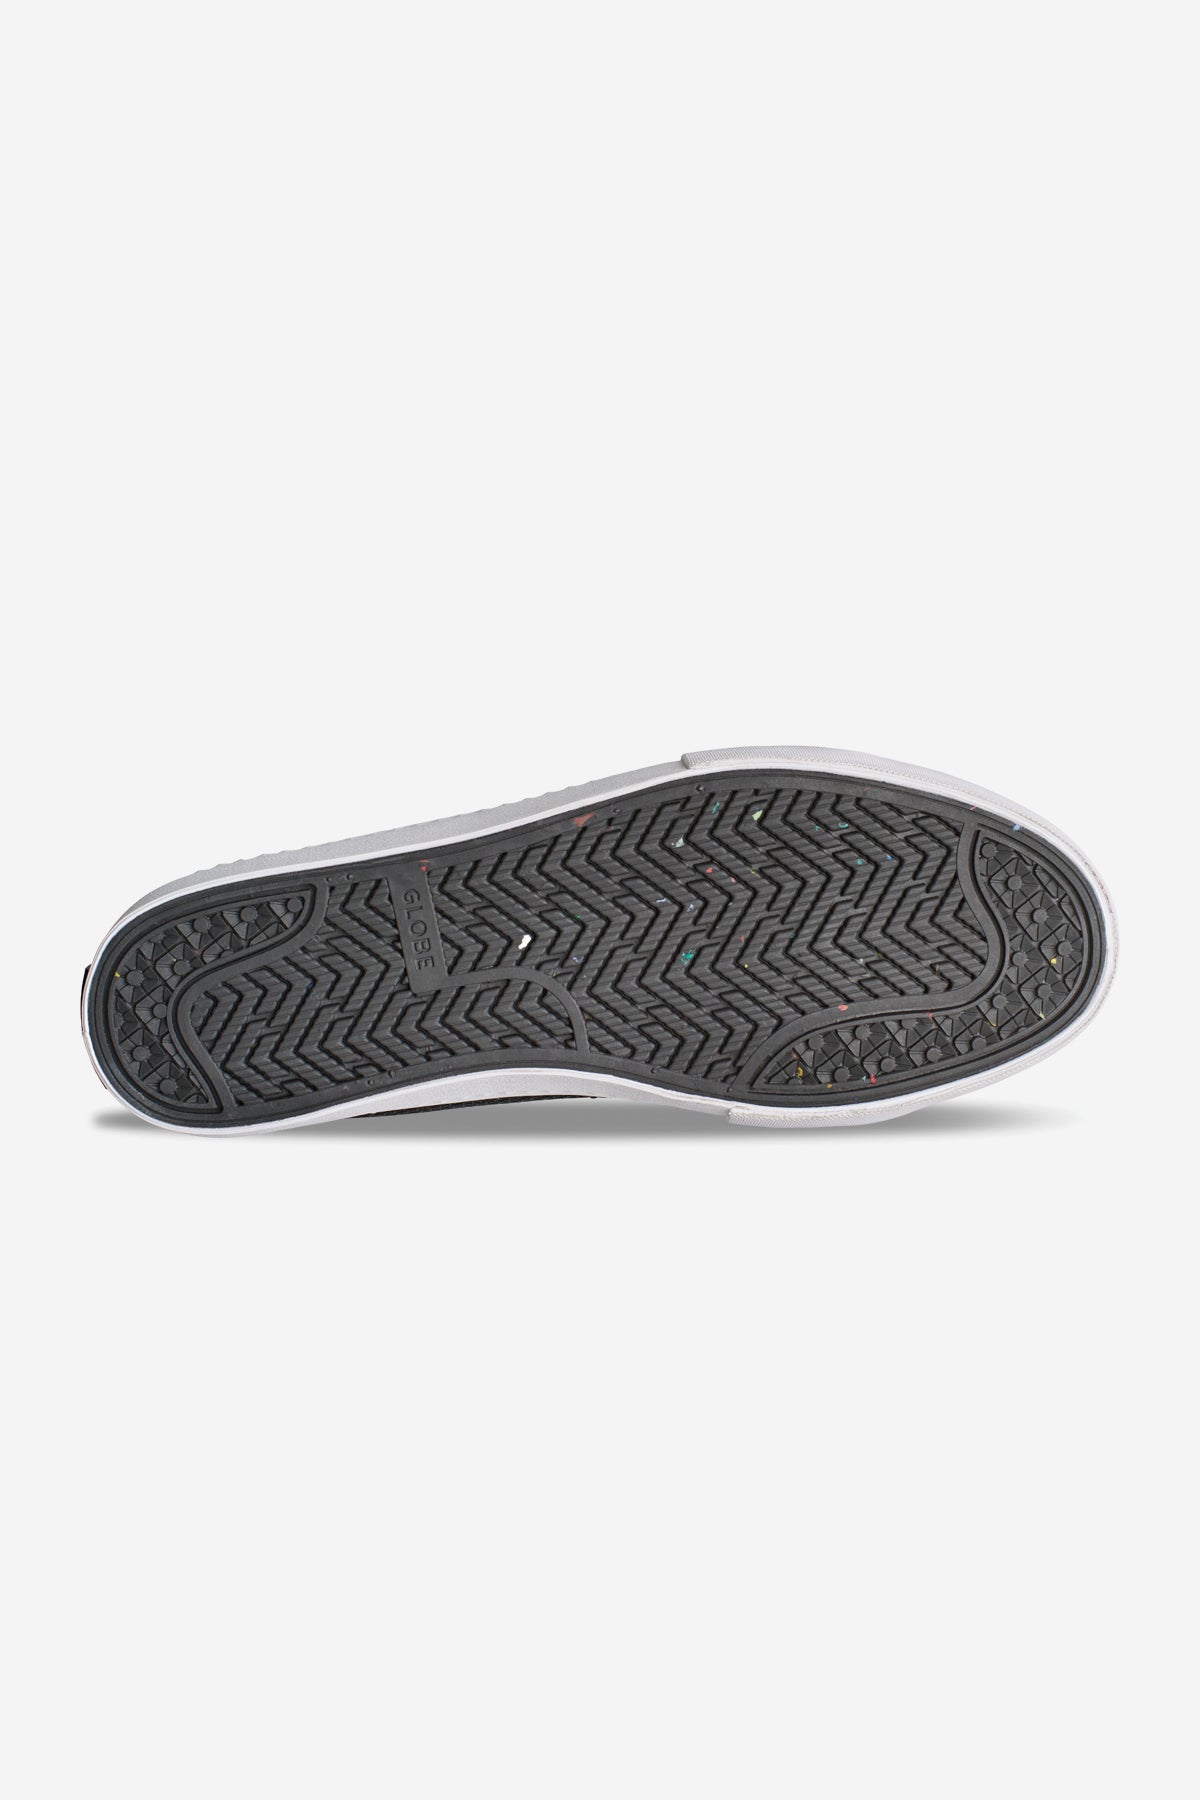 Globe - La Knit - Black/White - skateboard Schuhe